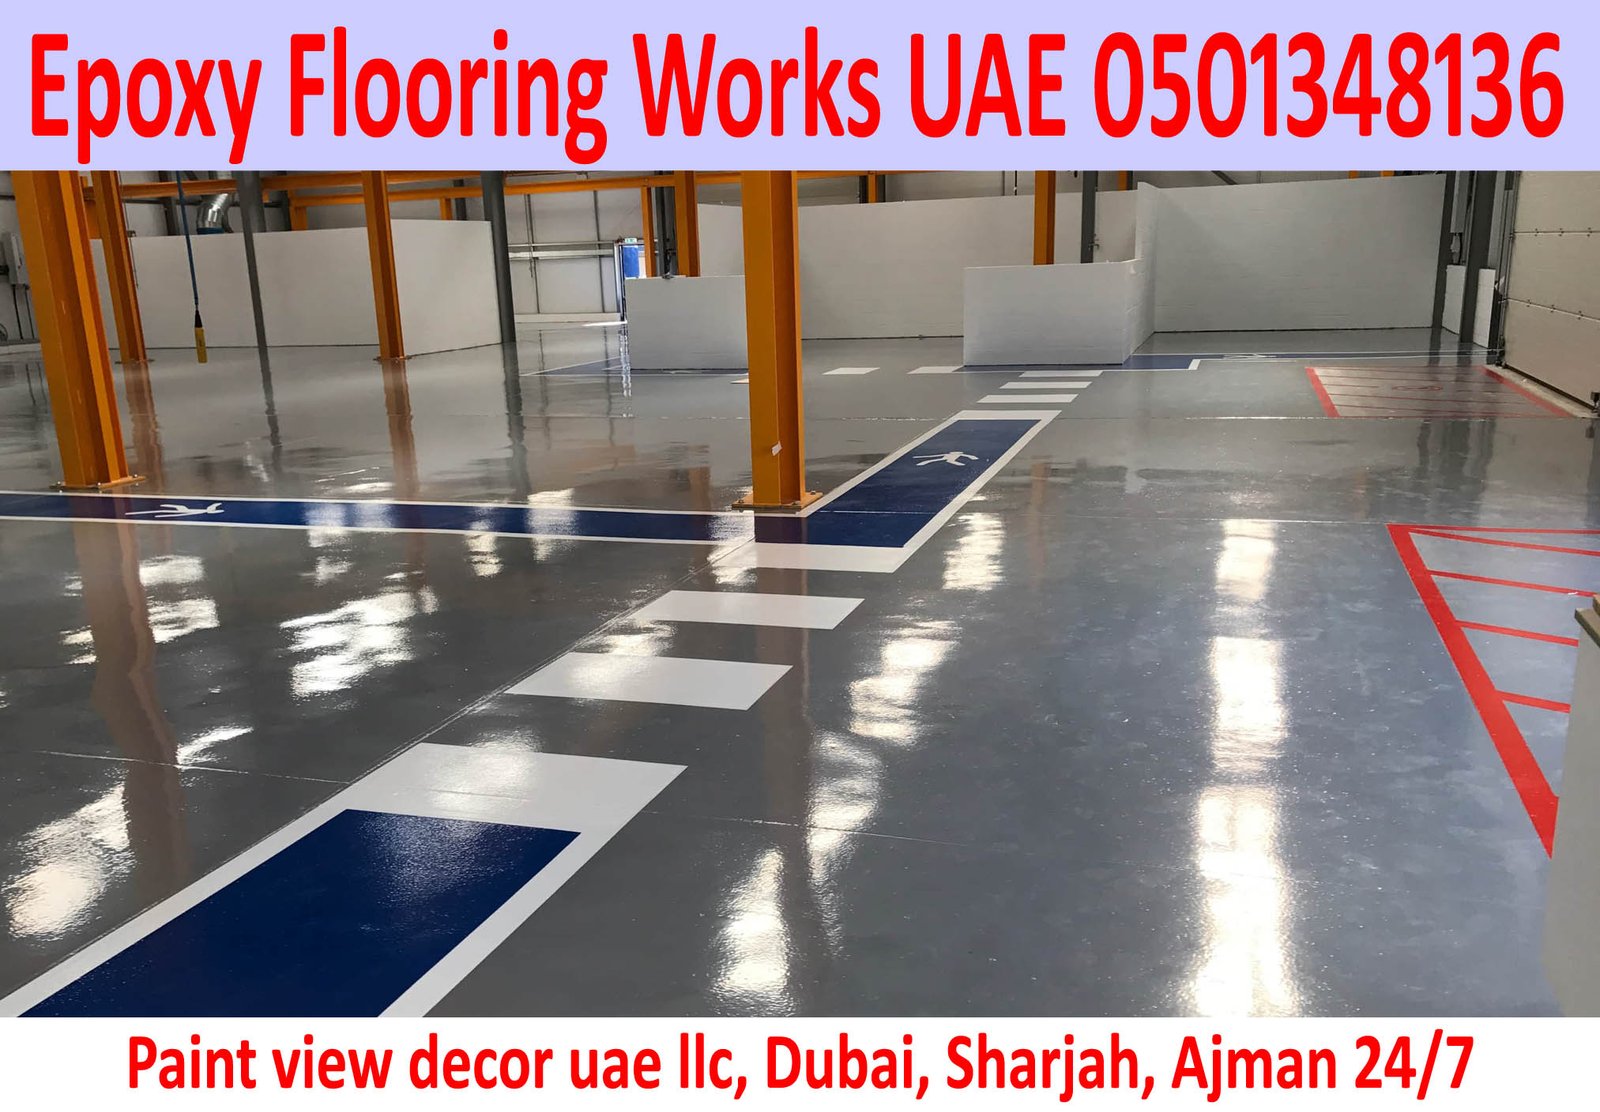 Epoxy Flooring Works Contractor Dubai UAE 0501348136